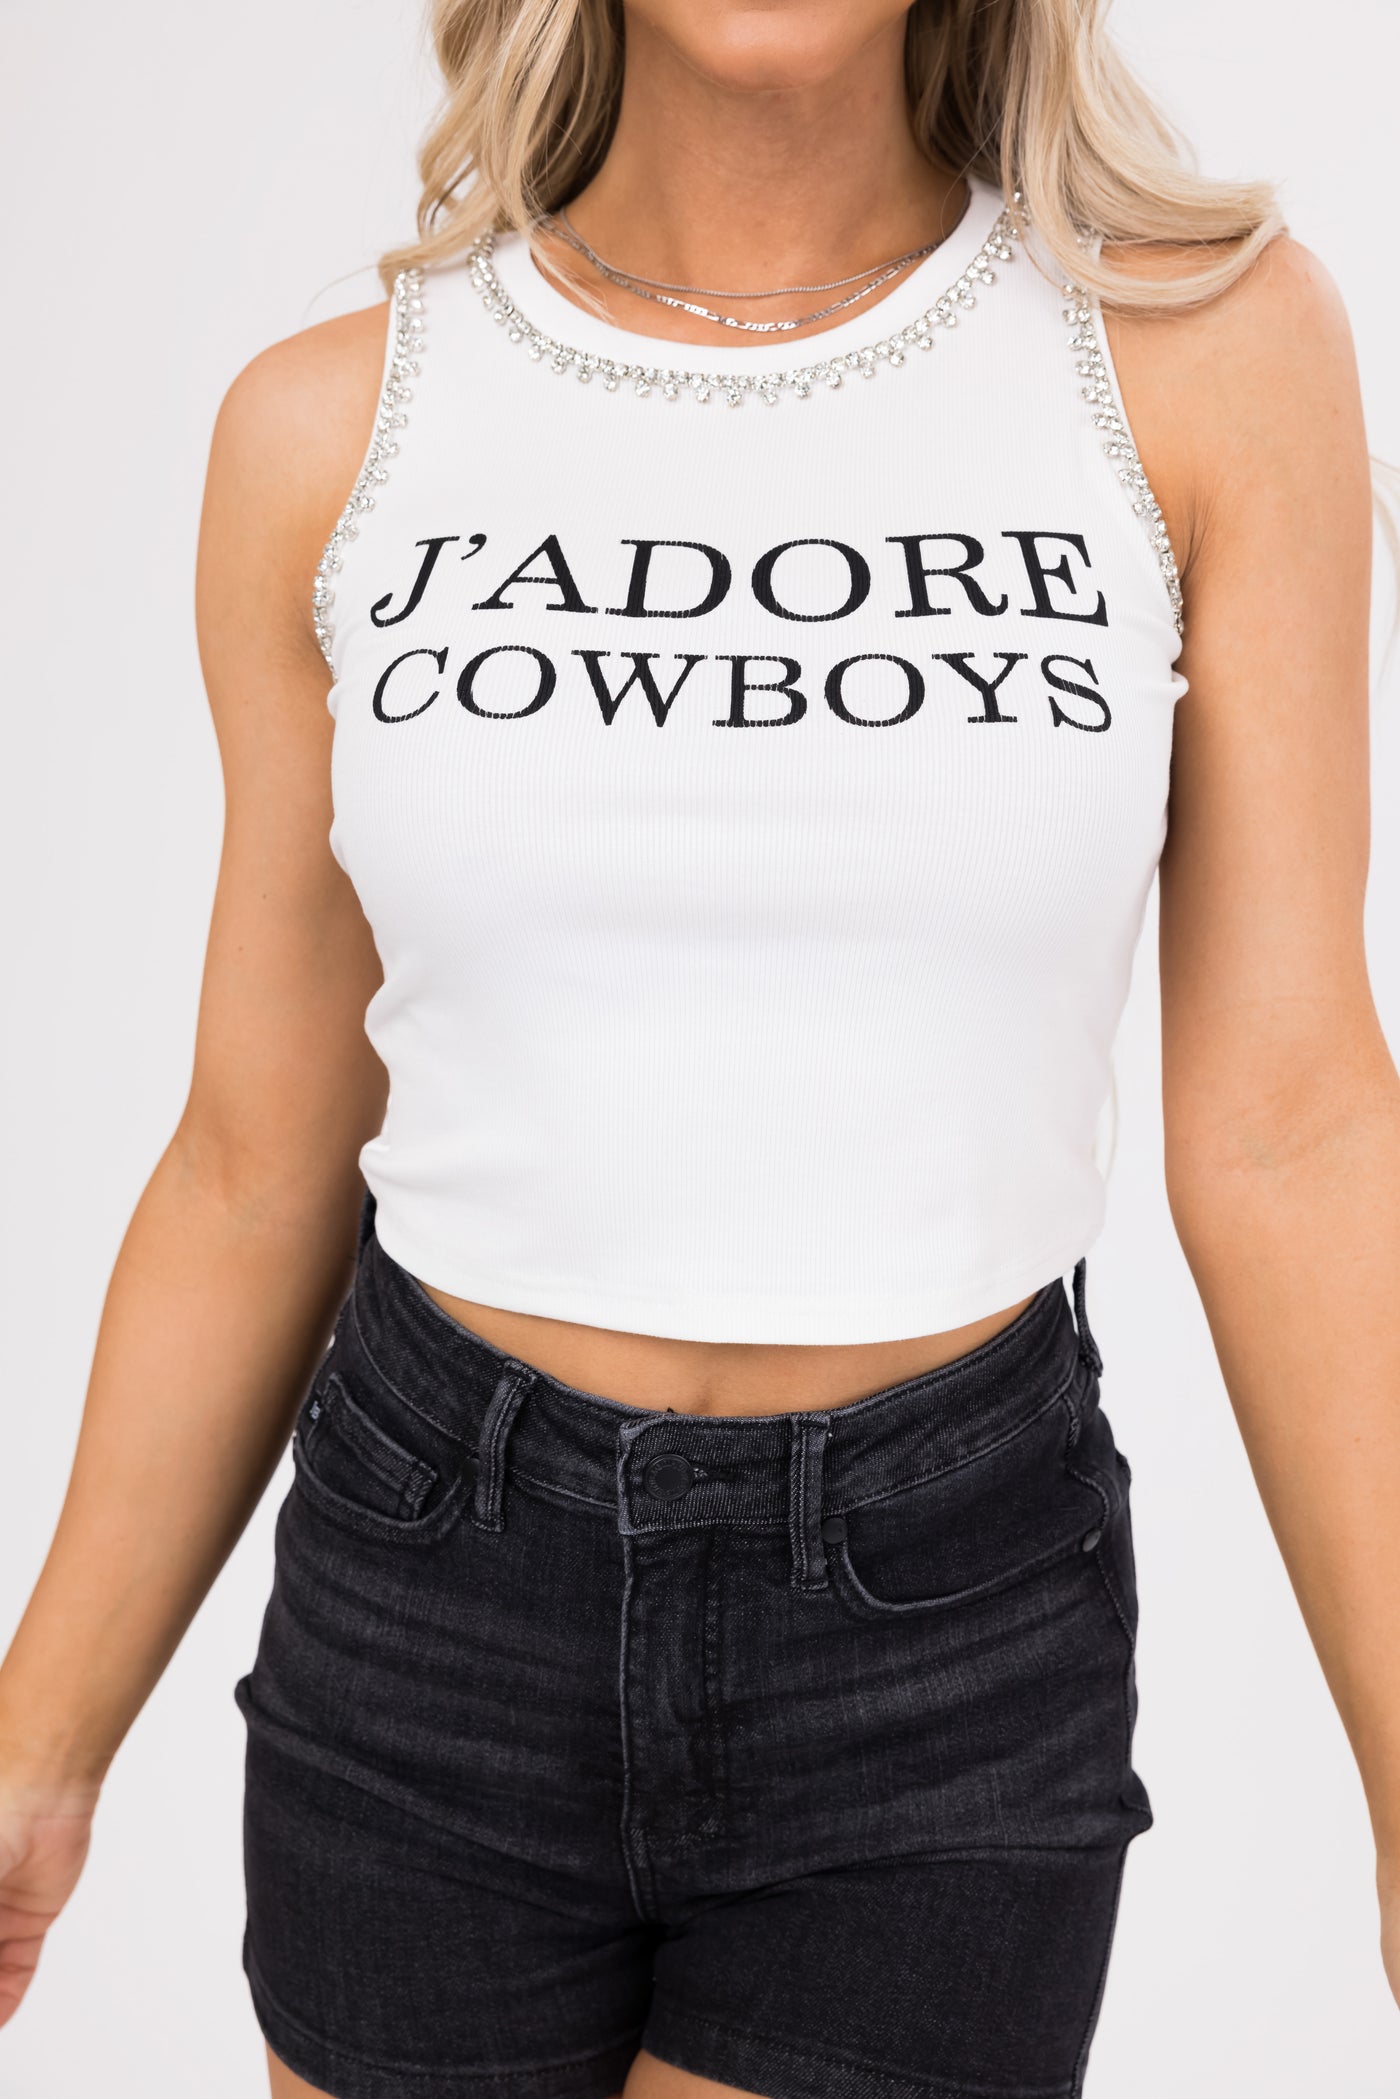 Ivory 'J'adore Cowboys' Rhinestone Trim Top